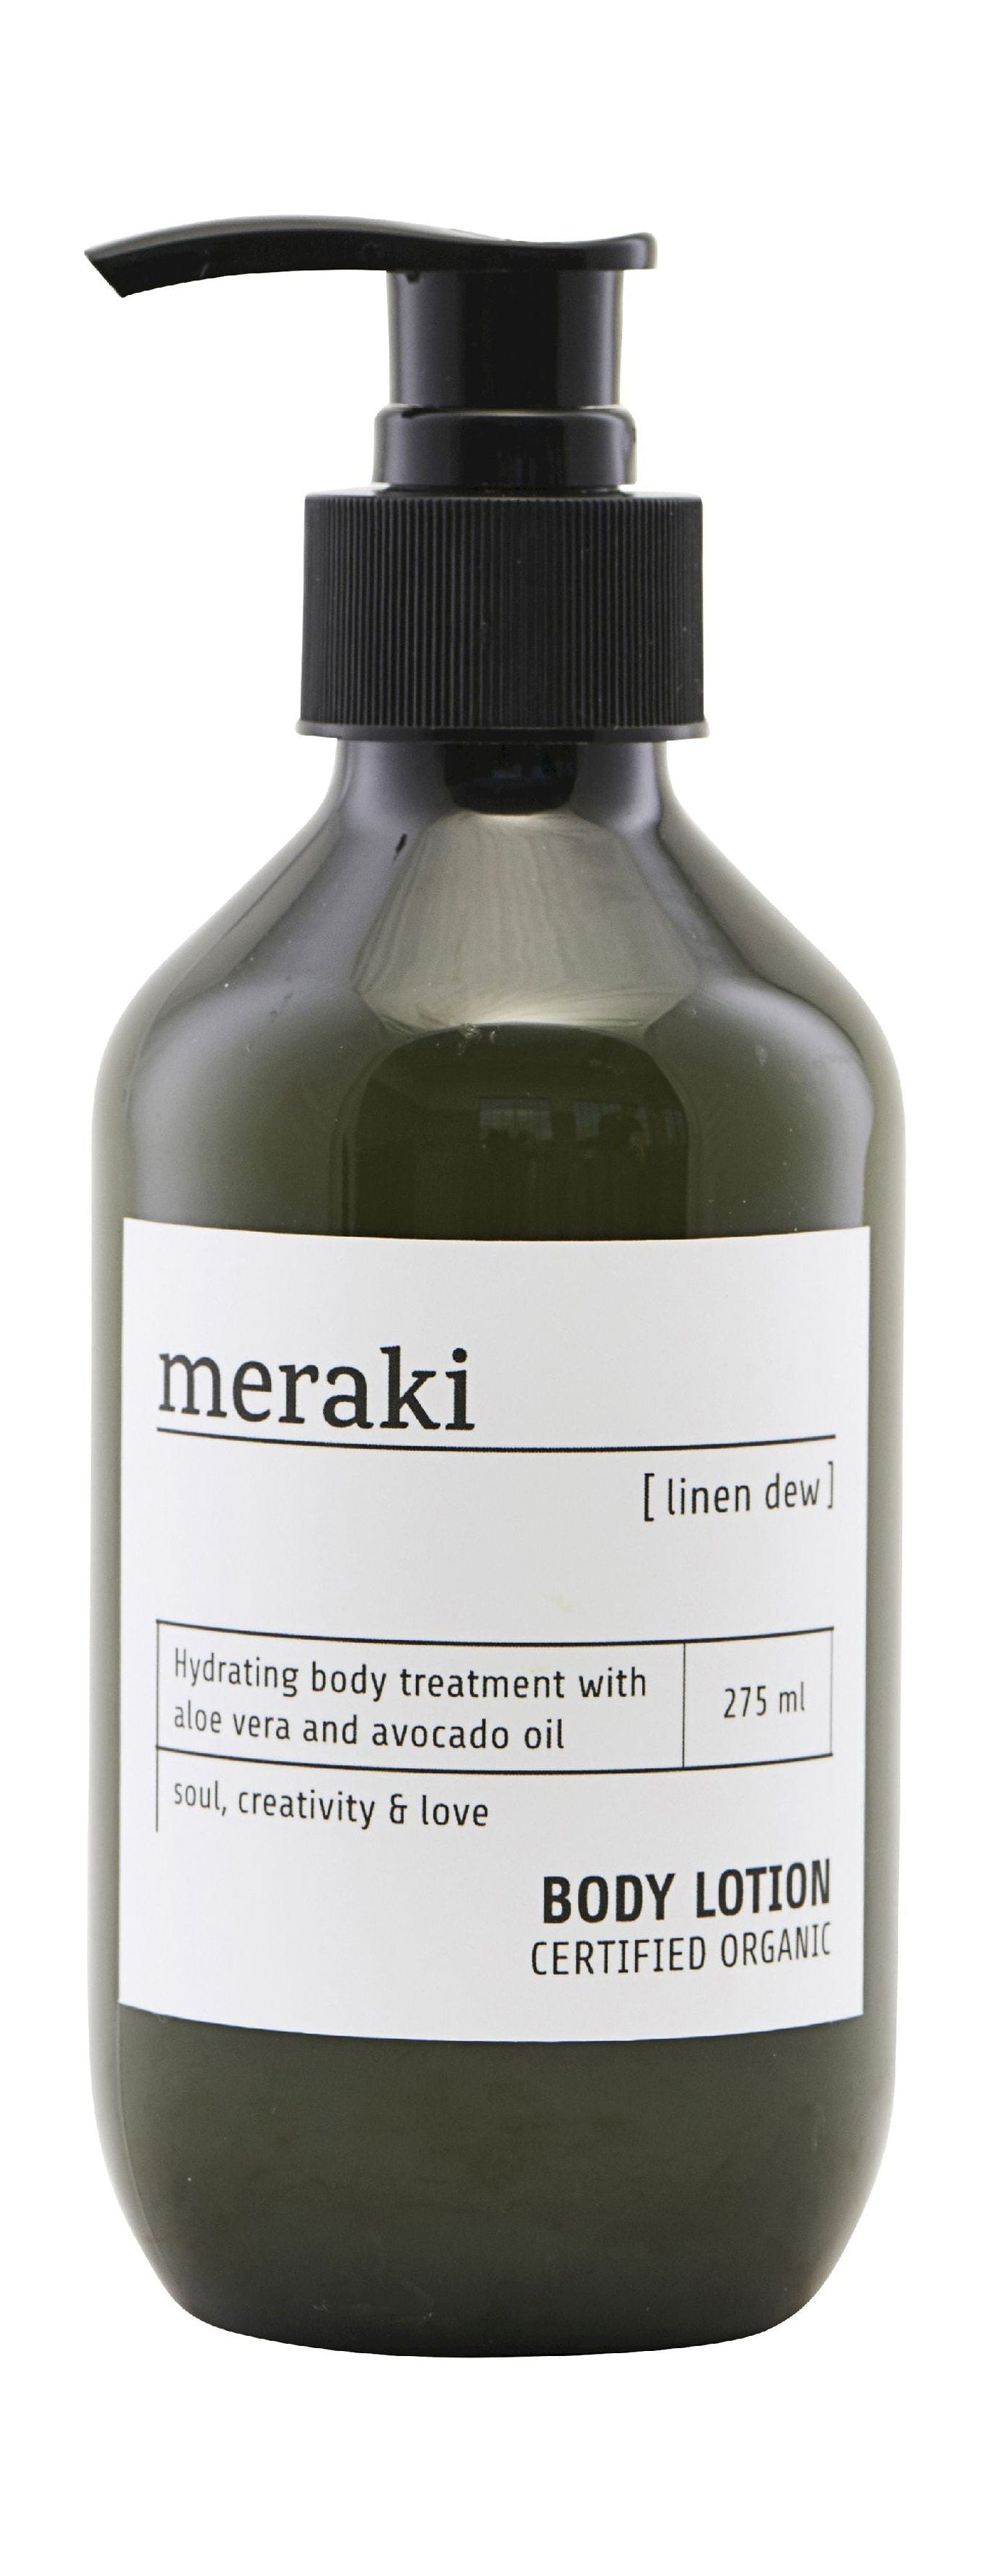 Lotion de corps Meraki 275 ml, rosée en lin